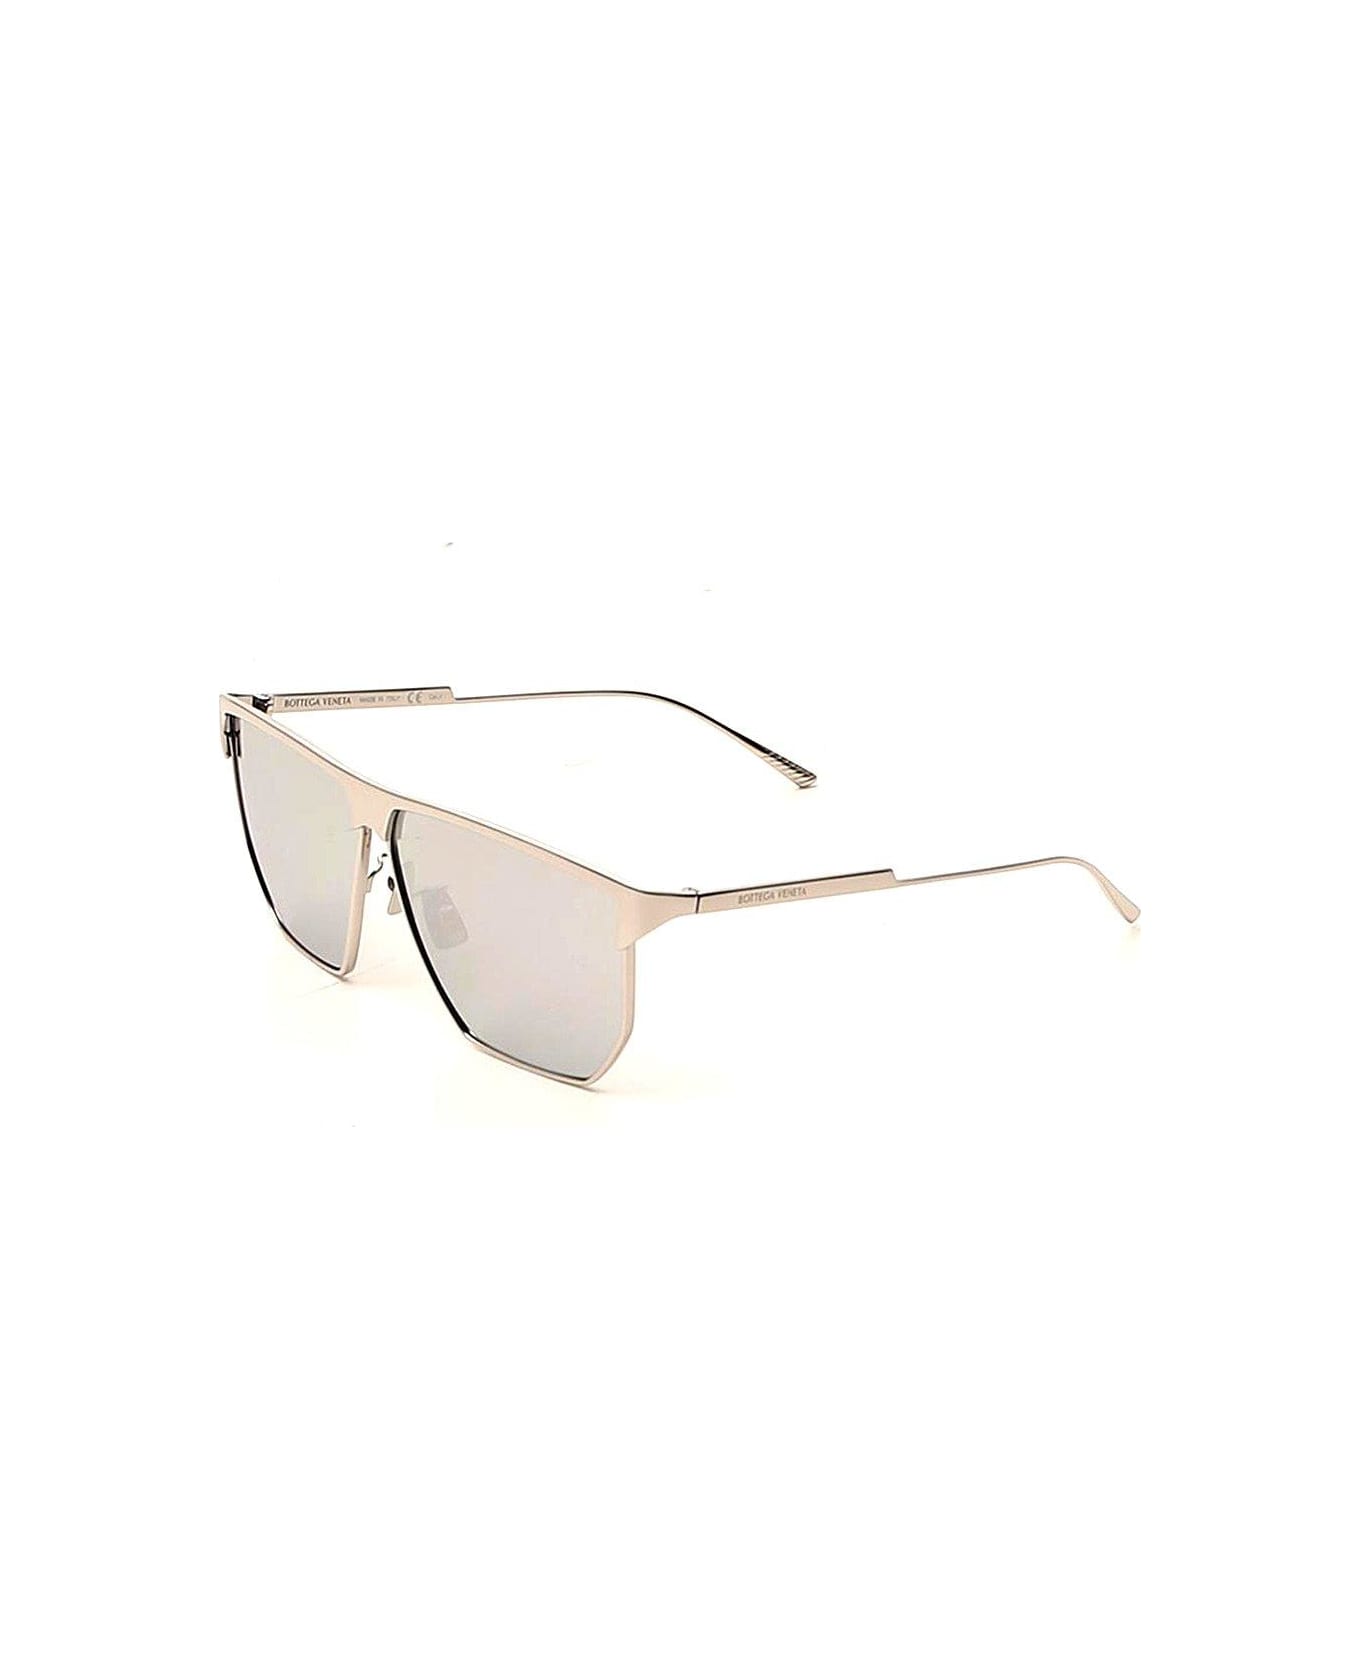 Bottega Veneta Angular Aviator Sunglasses - SILVER サングラス